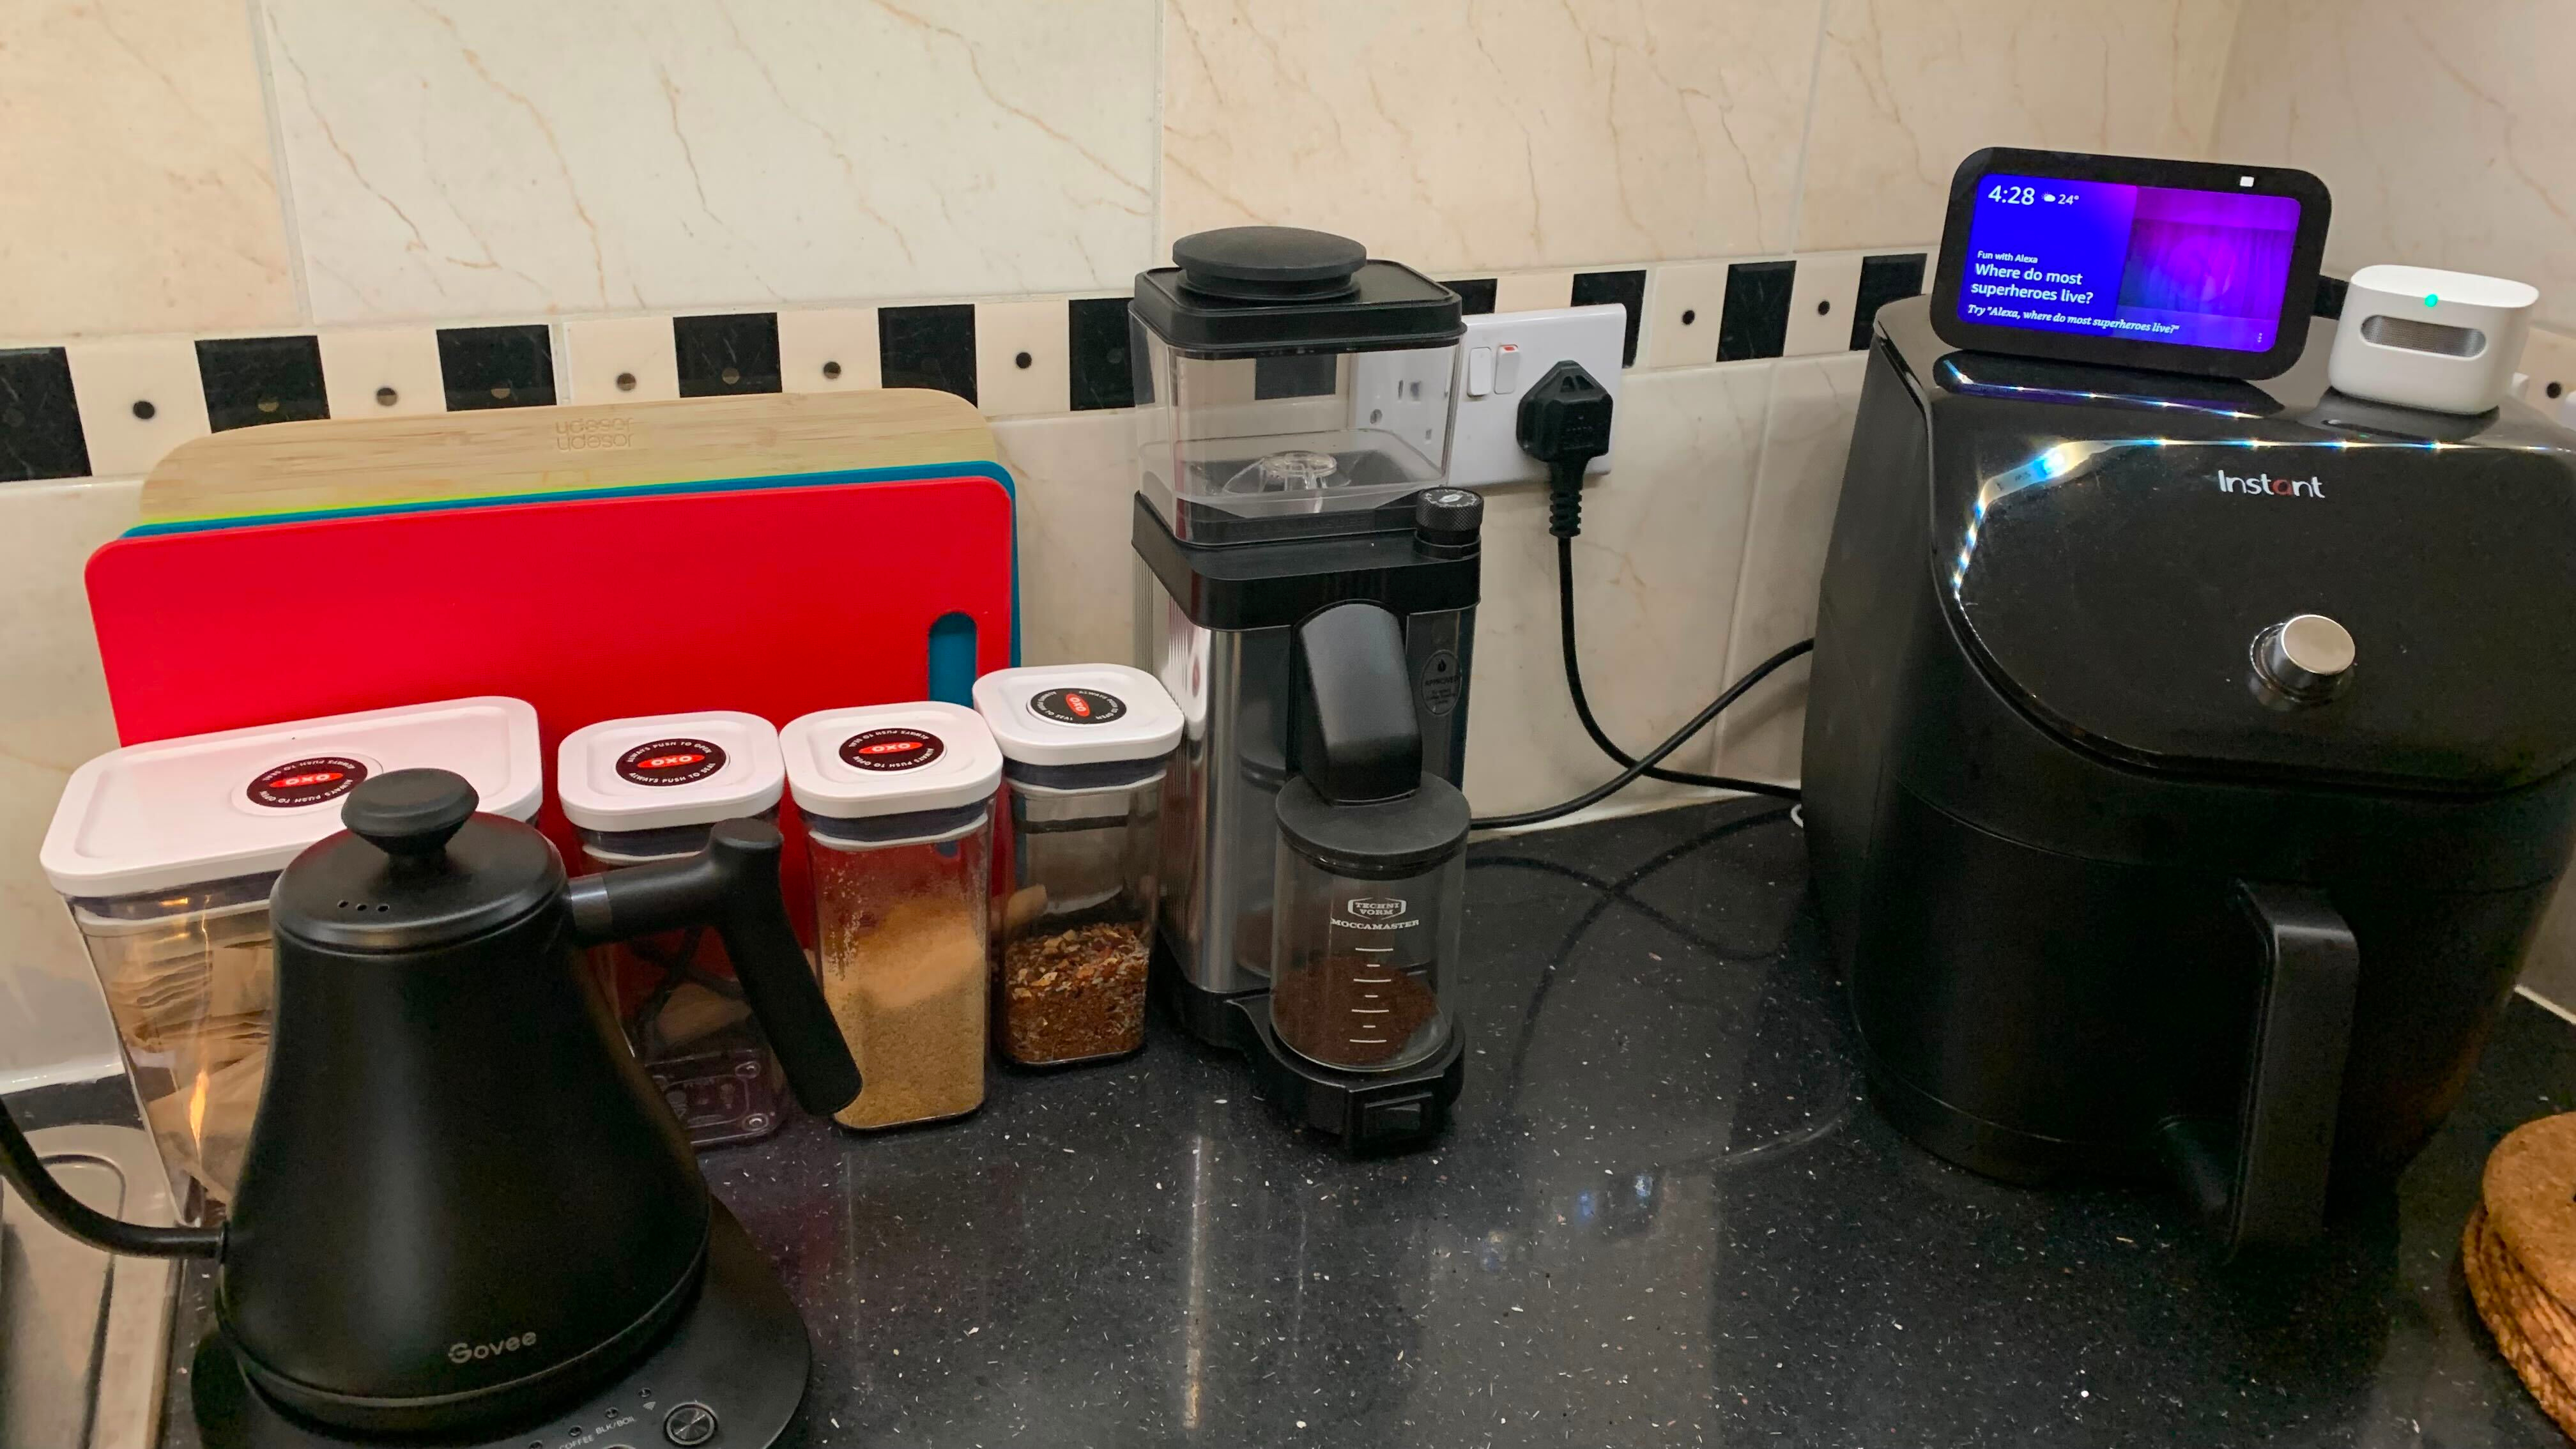 Moccamaster coffee grinders